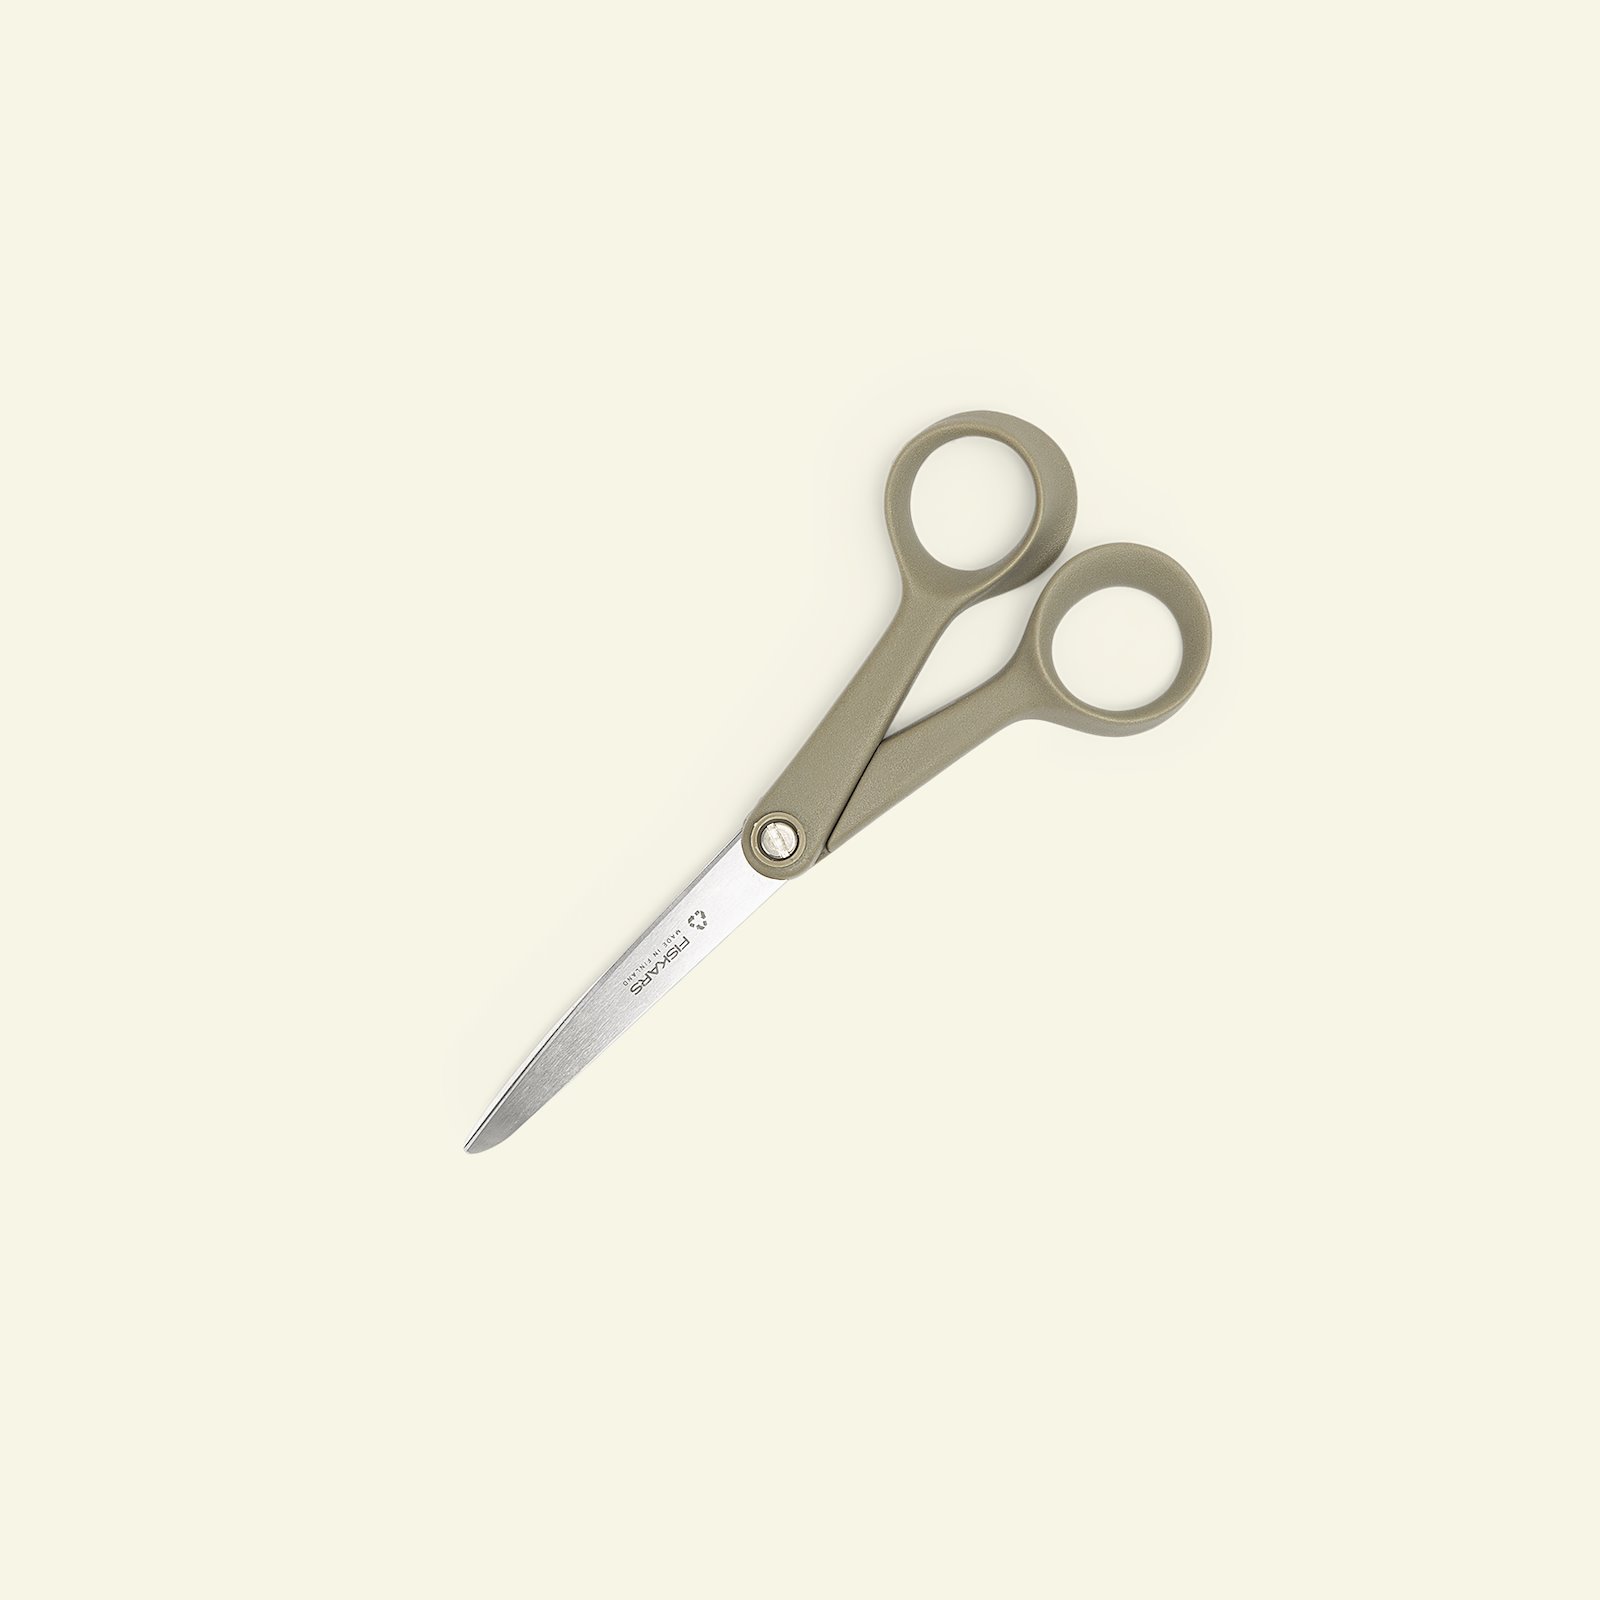 https://media.selfmade.com/images/fiskars-renew-universal-scissors-17cm-42032-pack.jpg?width=1600&height=1600&i=54423&ud=ah79gkr92qg